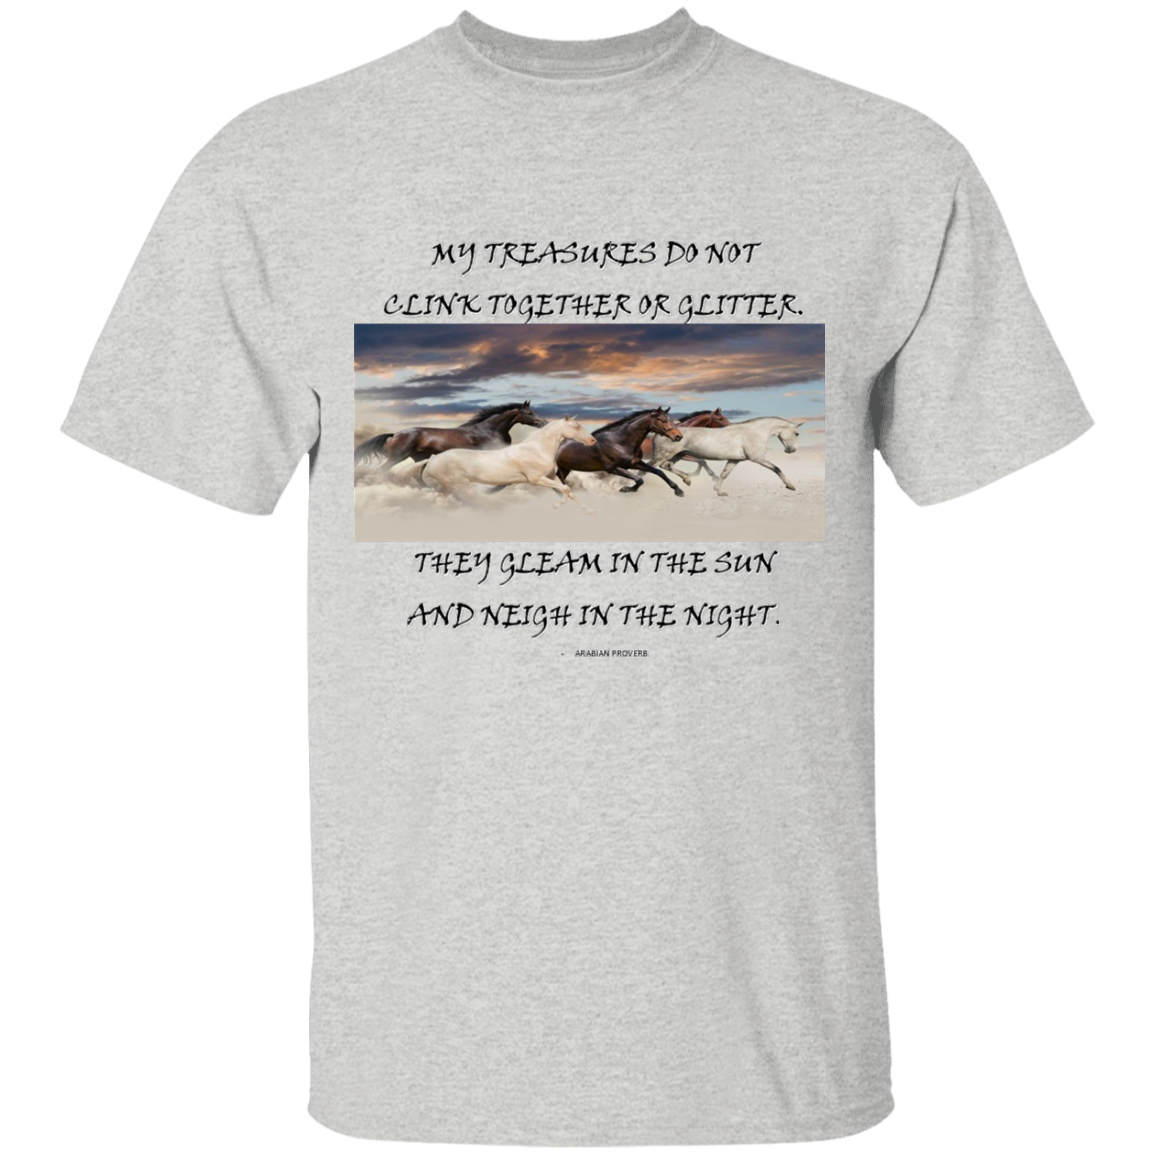 Horse treasures t-shirt